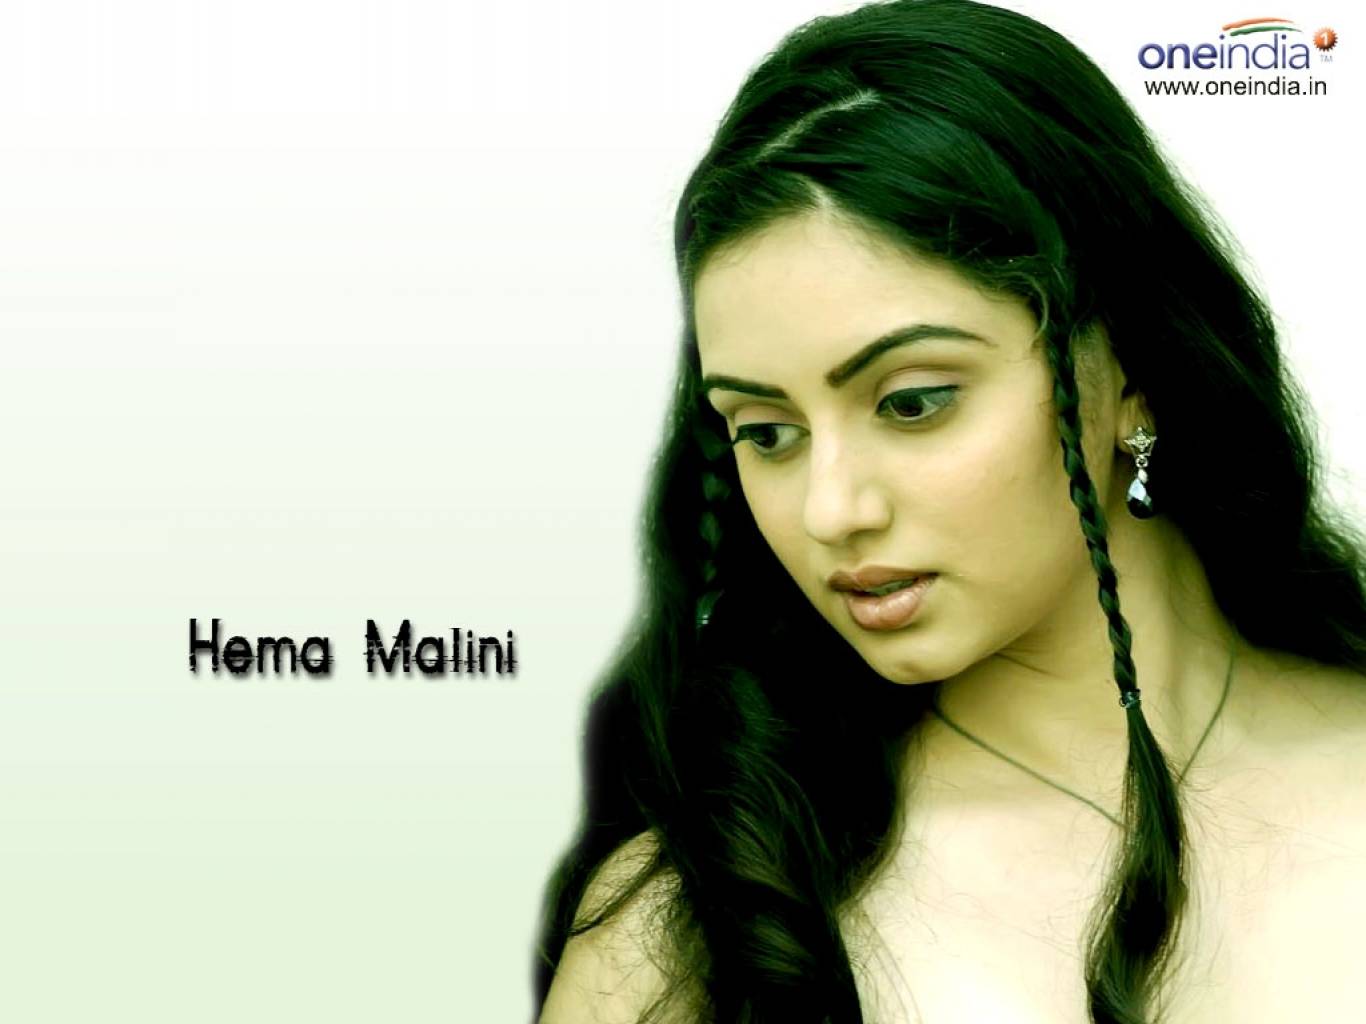 Hema Malini Heroine Ki Nangi Photo Nangi Photo - Hema Malini Wallpapers - Top Free Hema Malini Backgrounds - WallpaperAccess